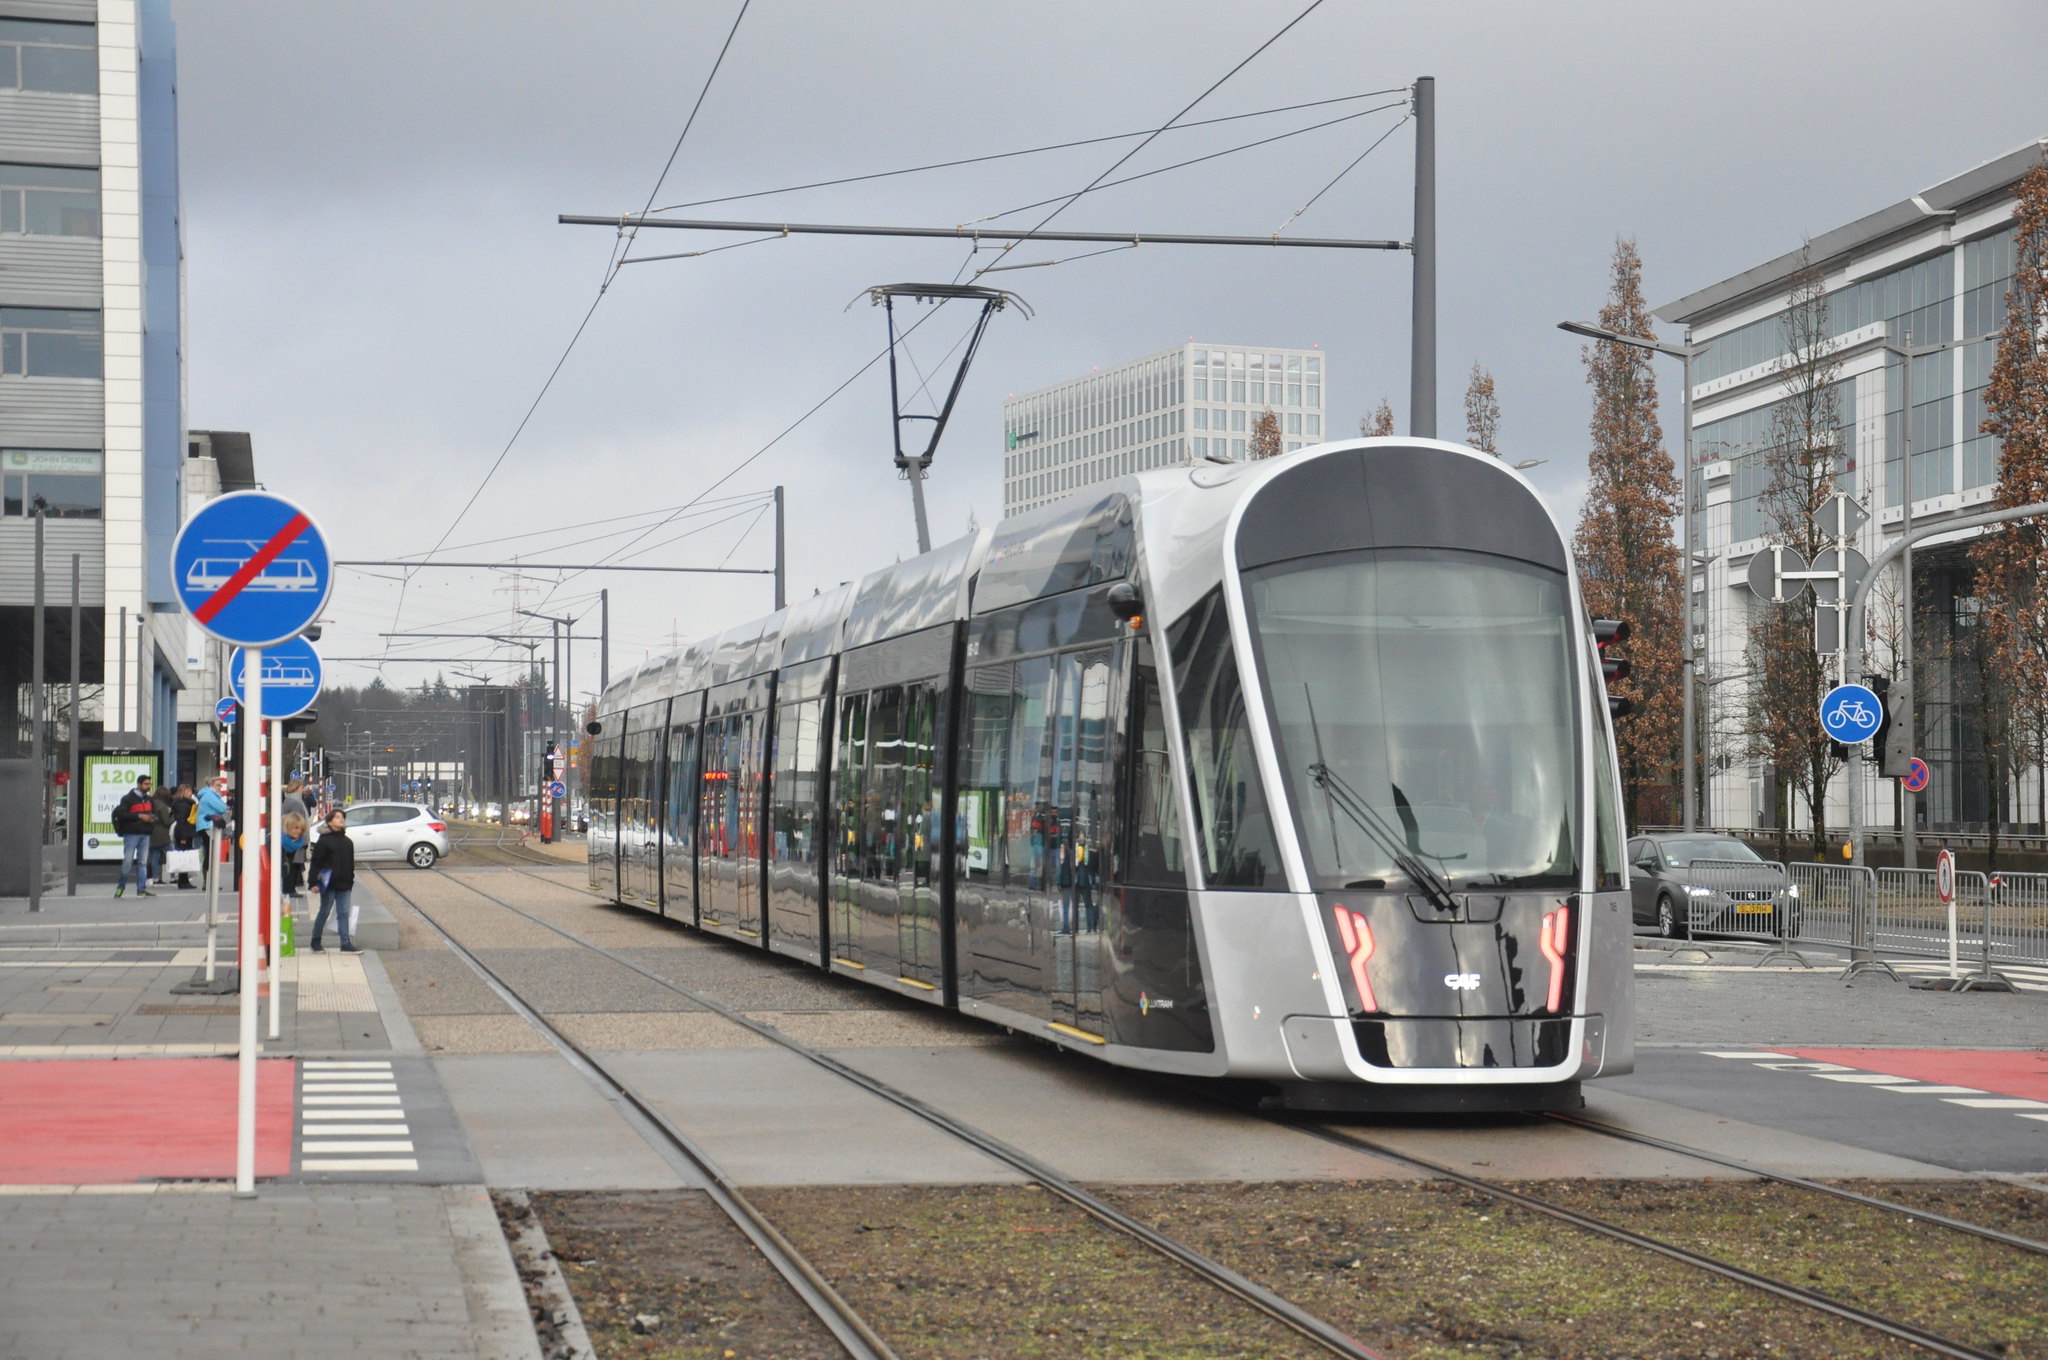 a modern tram moves through a city